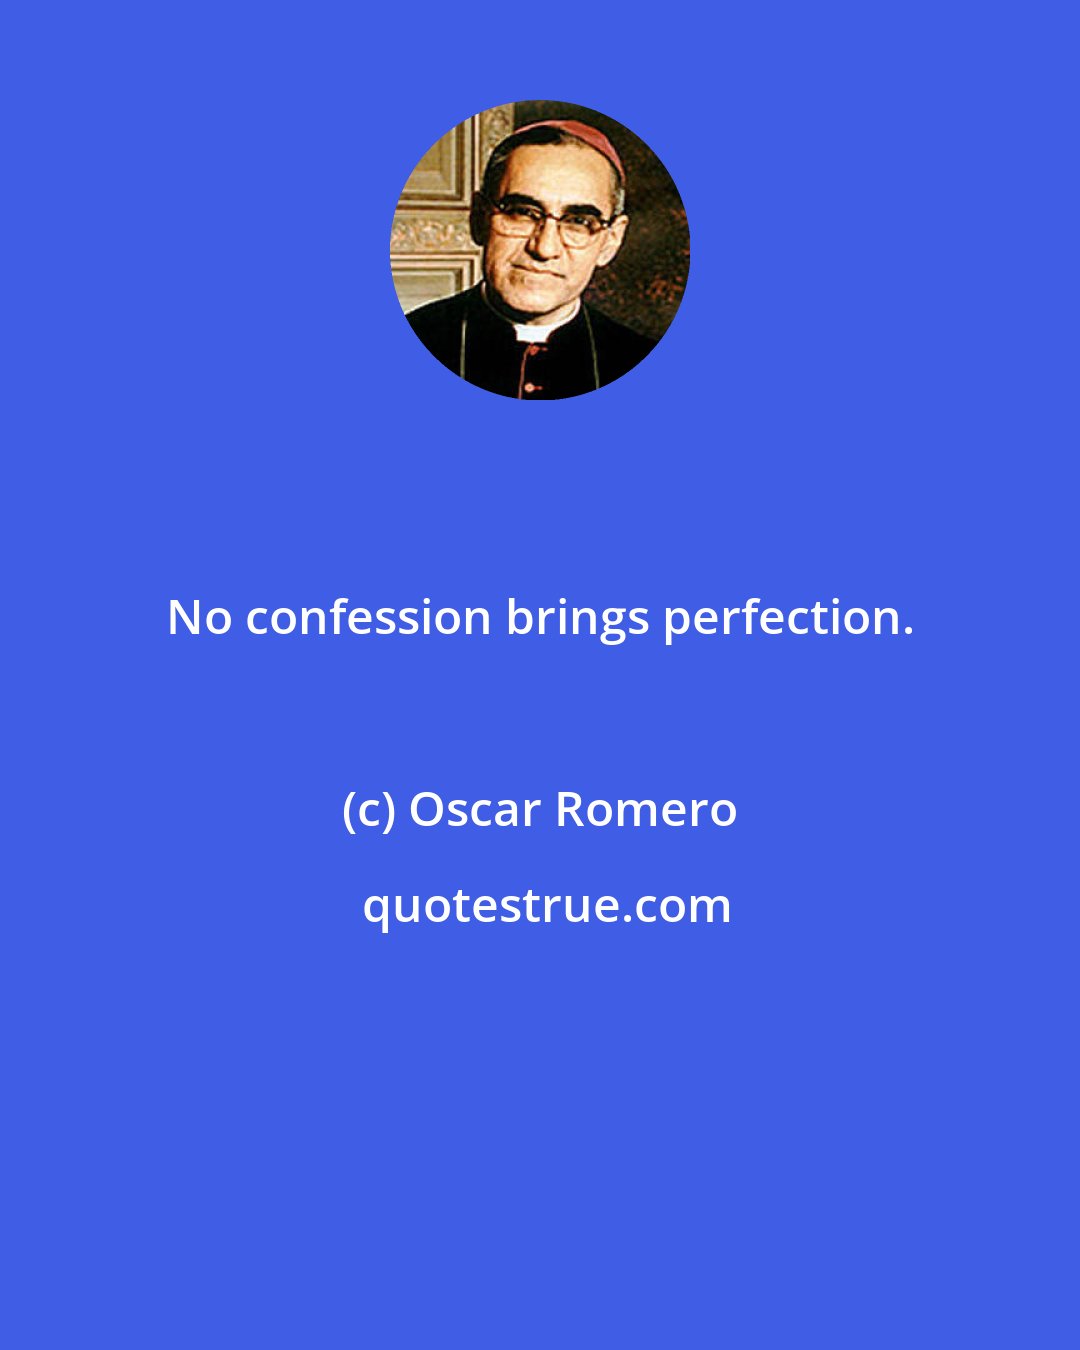 Oscar Romero: No confession brings perfection.